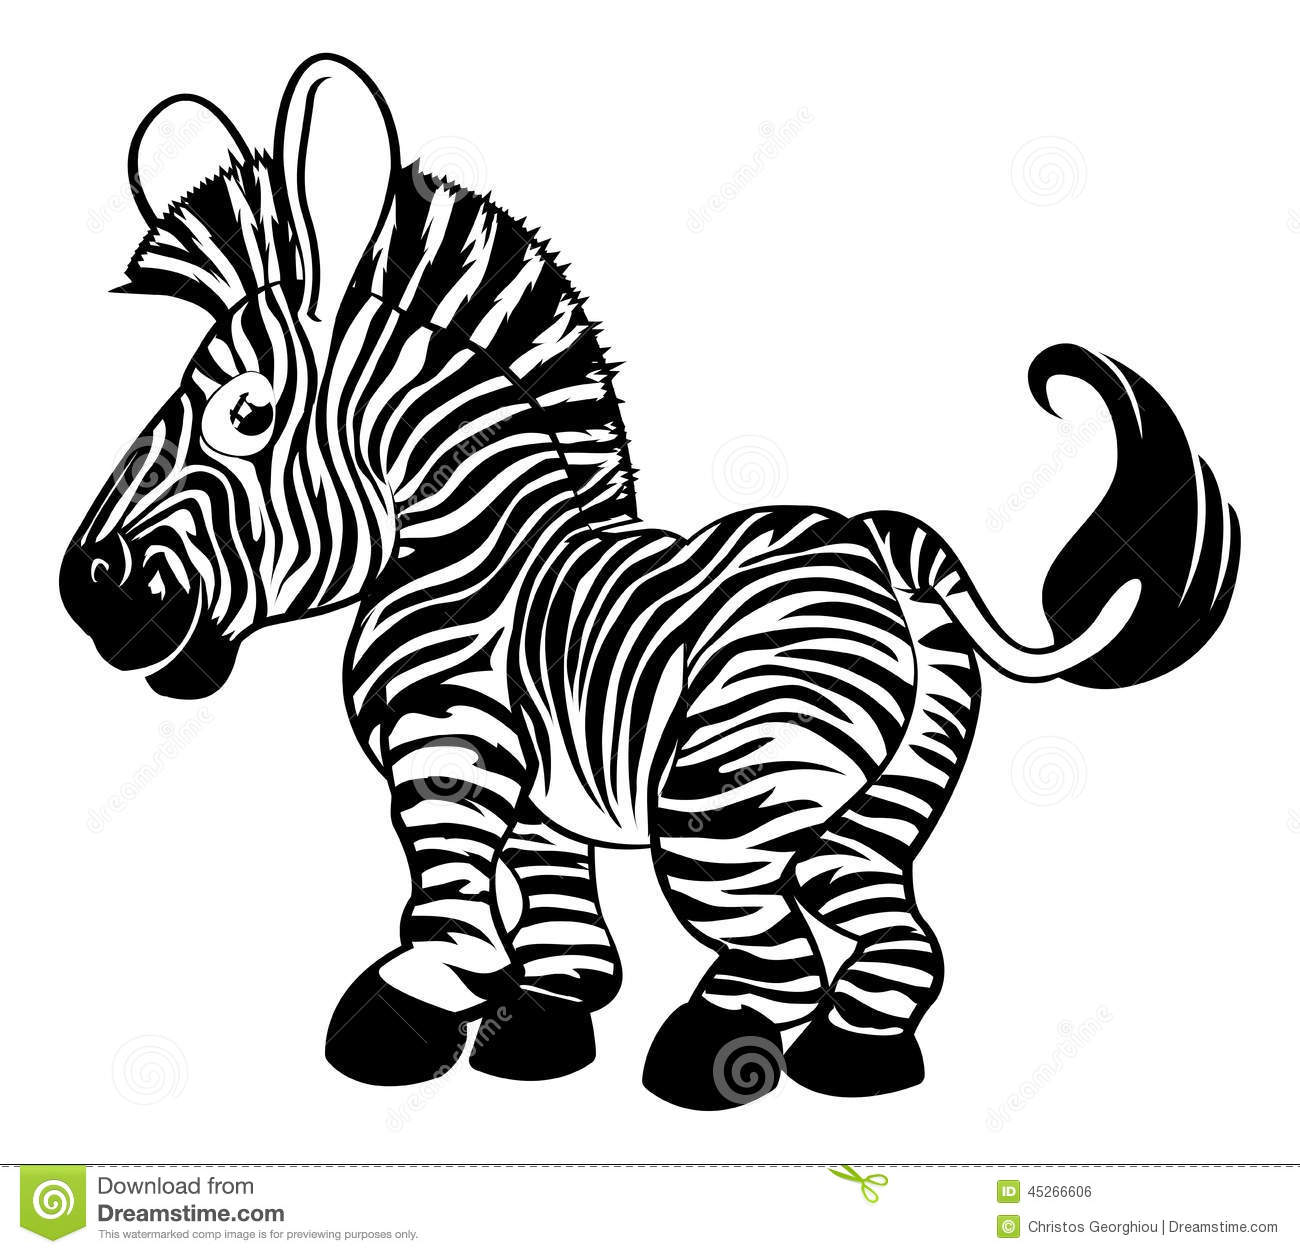 Black and White Cartoon Zebra